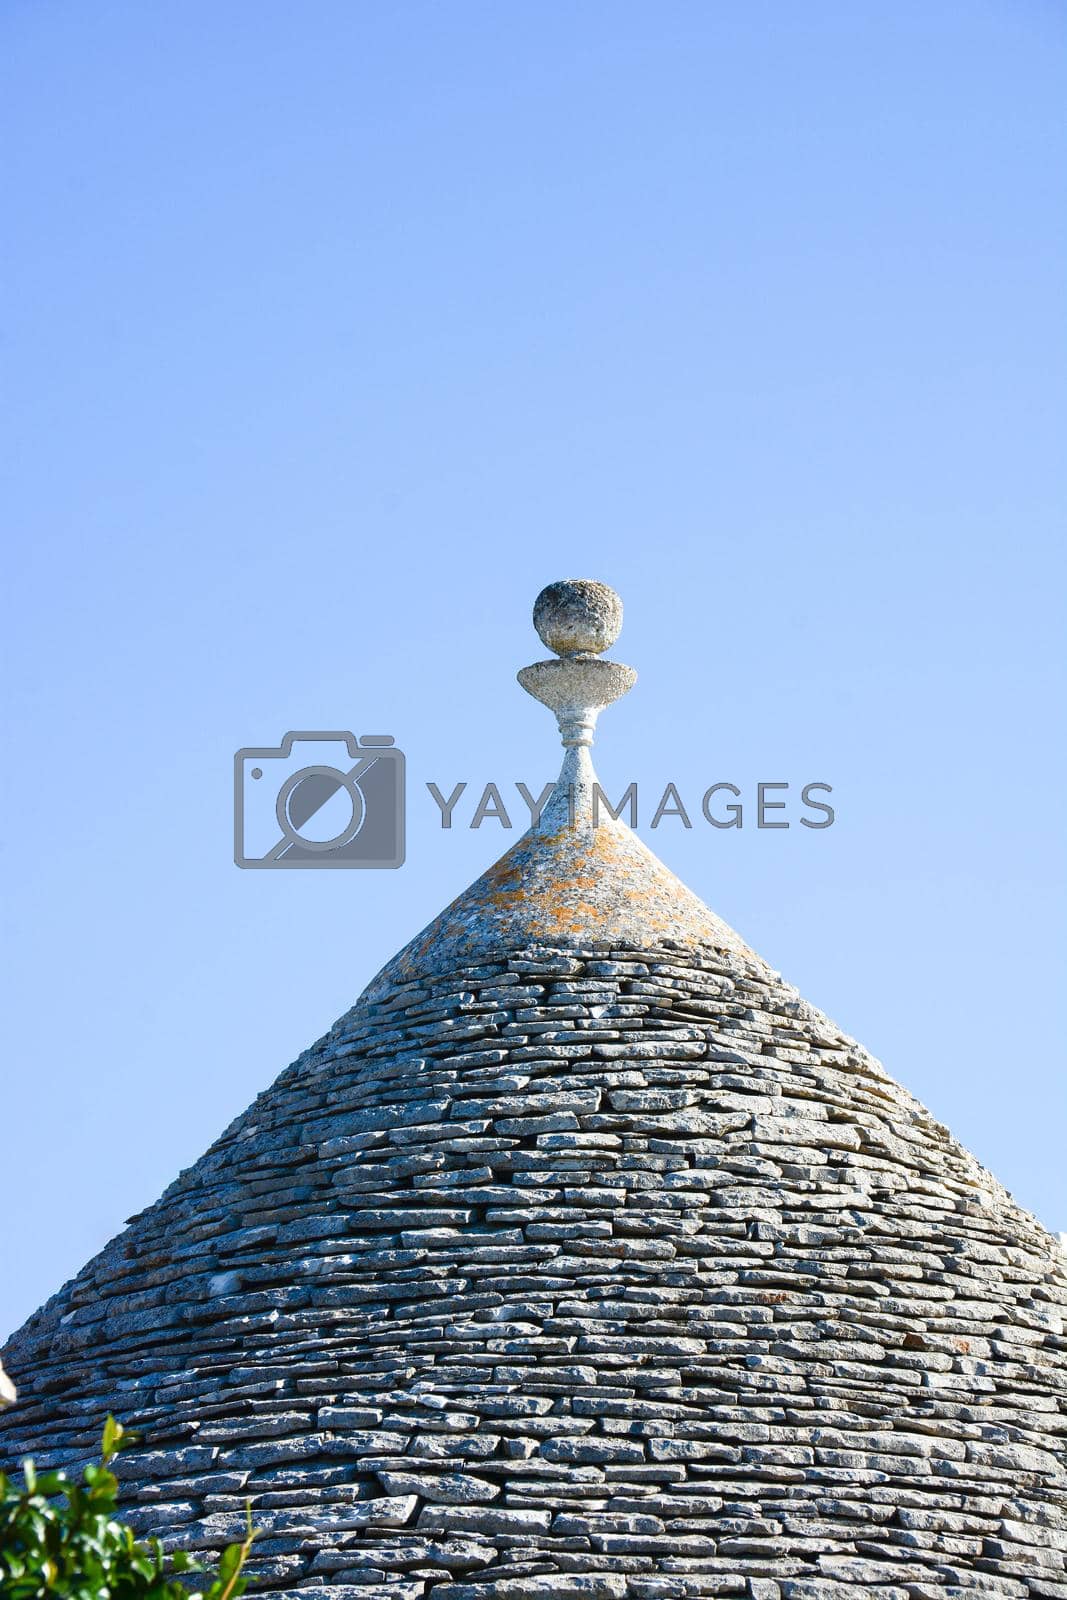 Royalty free image of trulli symbols by iacobino